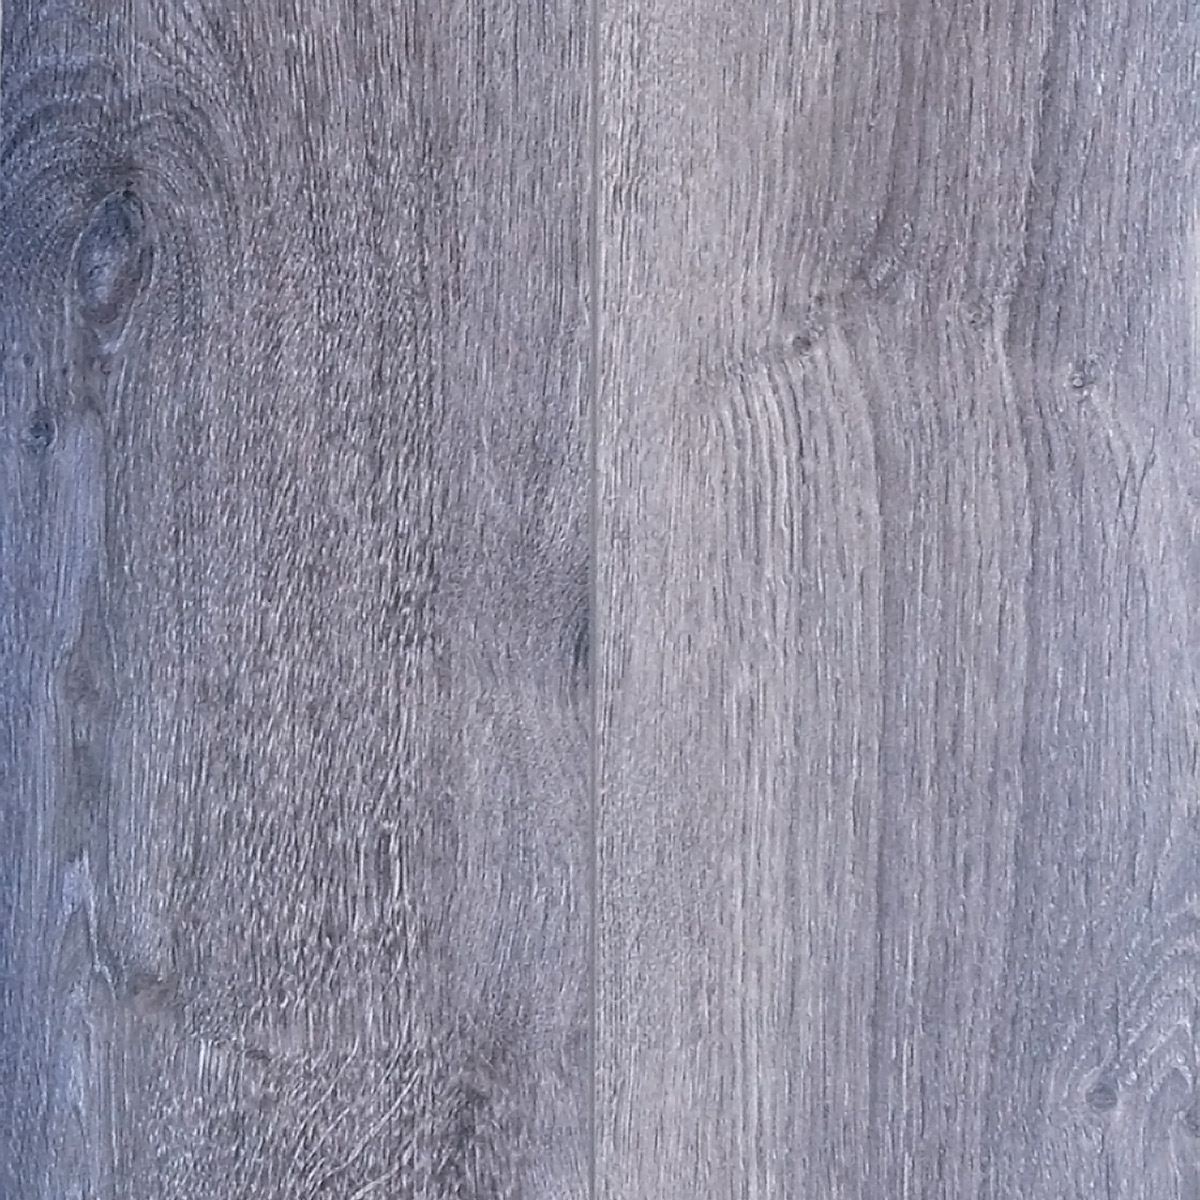 8mm Laminate Flooring Oak In Napa Stone, Patina Design Laminate Flooring